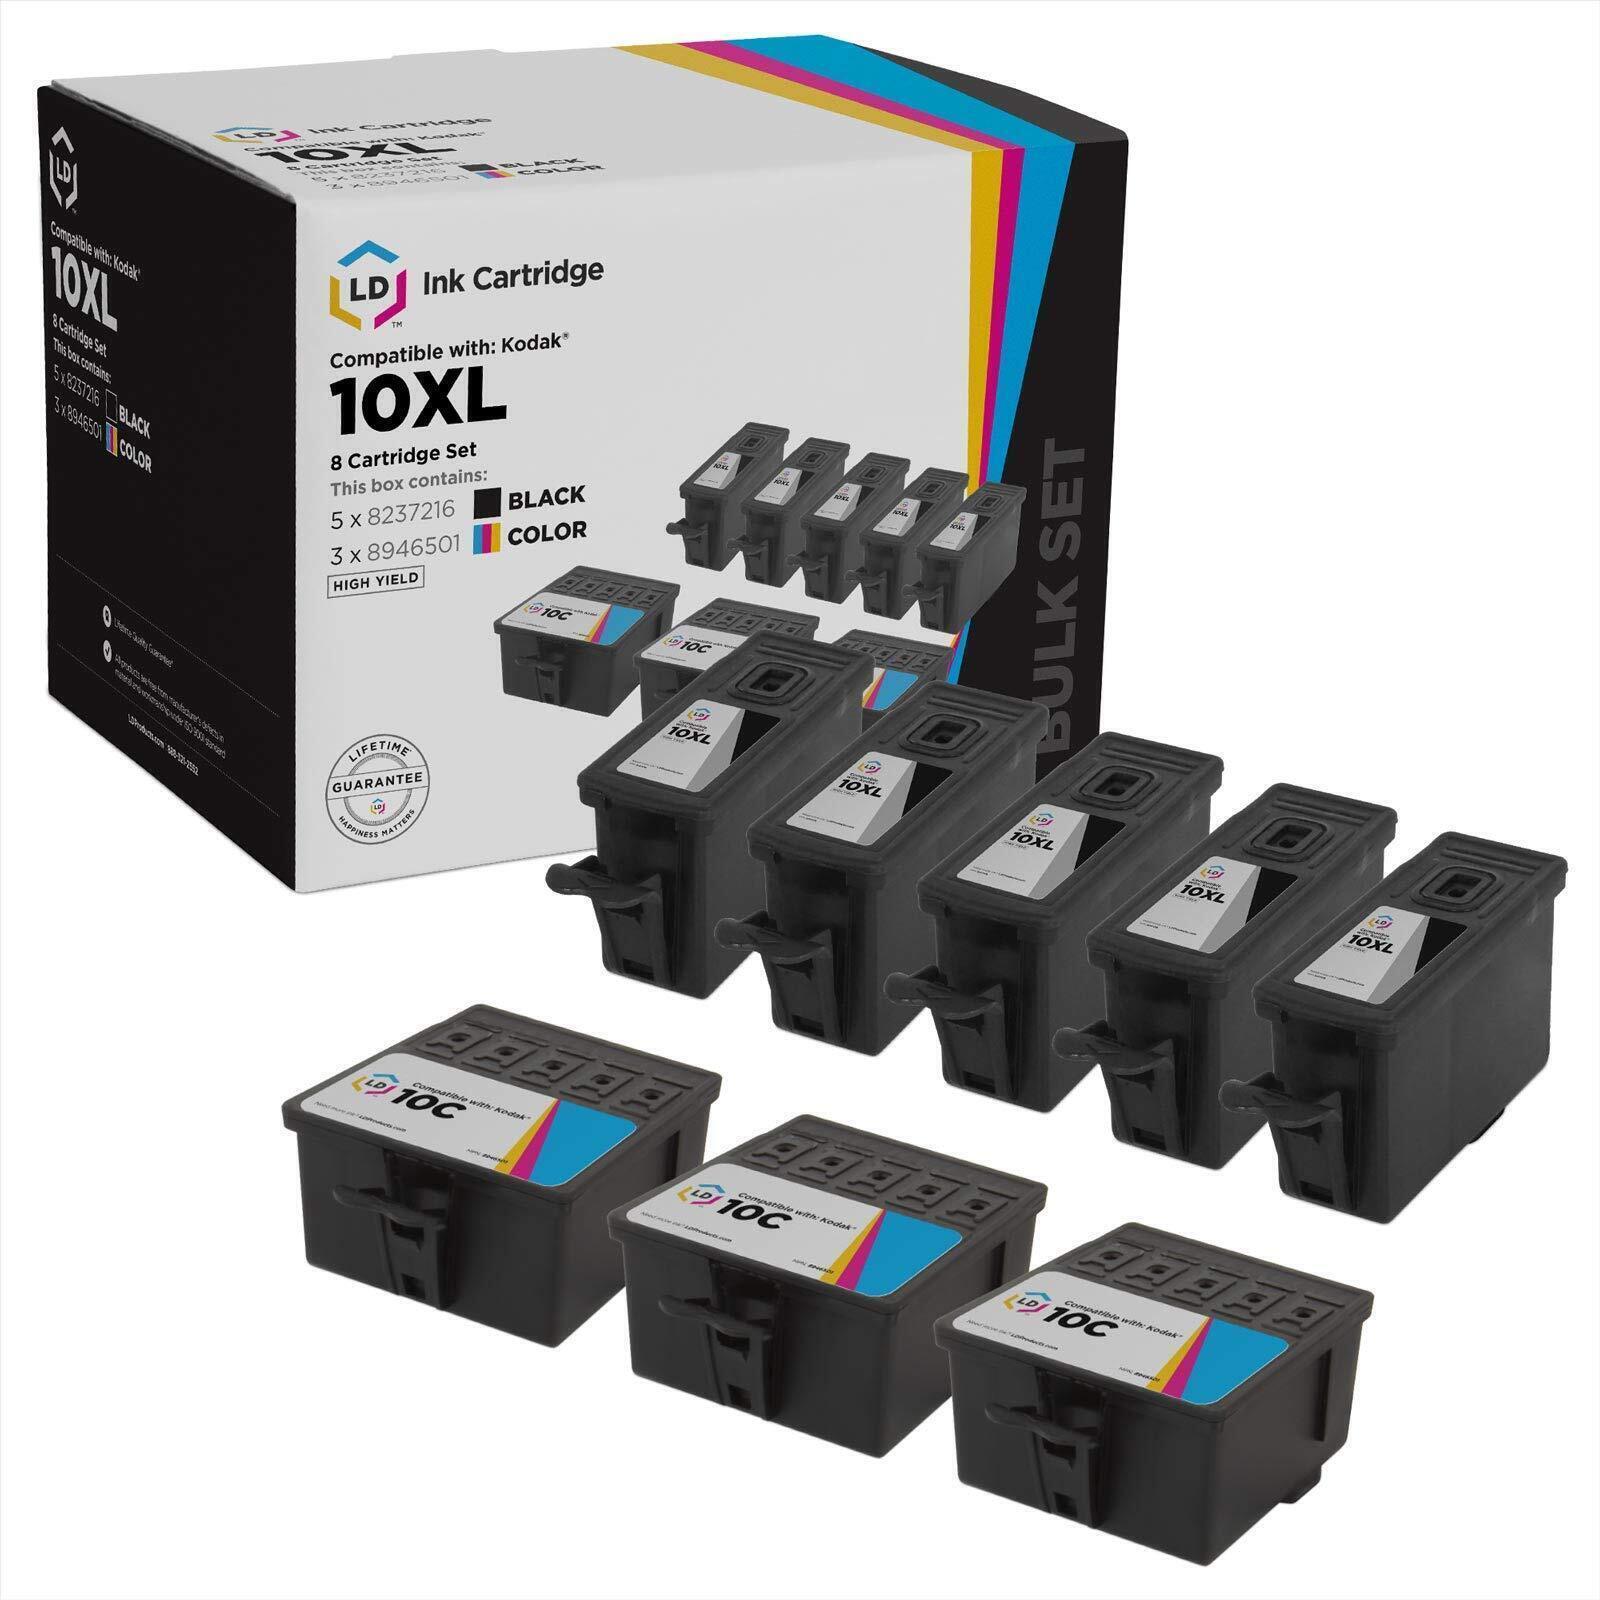 LD 8 Pack 8237216 10XL Black Color Ink Cartridge Set for Kodak Printer